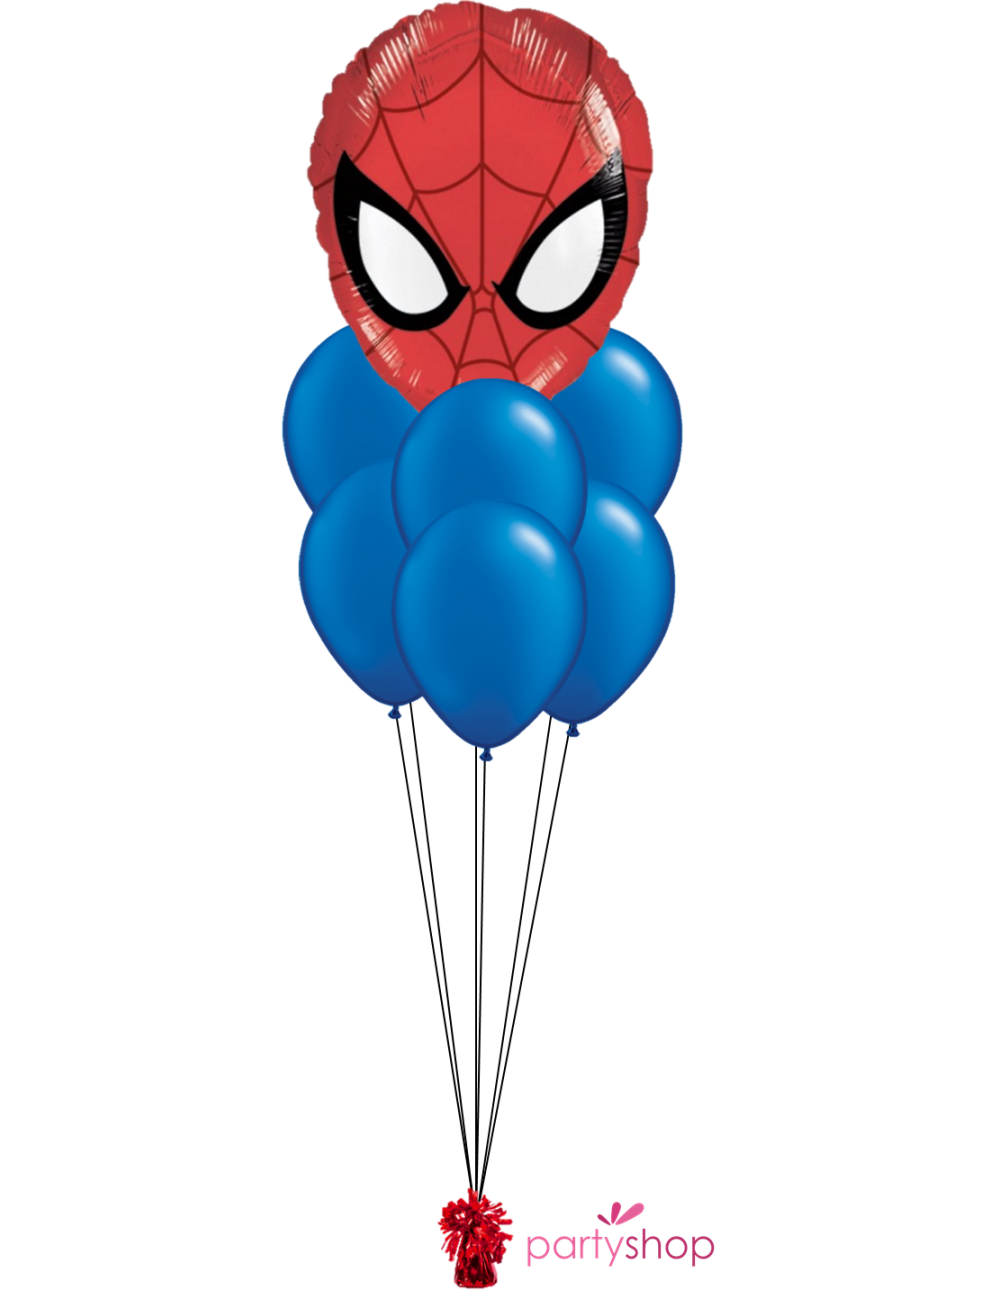 Bouquet de ballon Spiderman